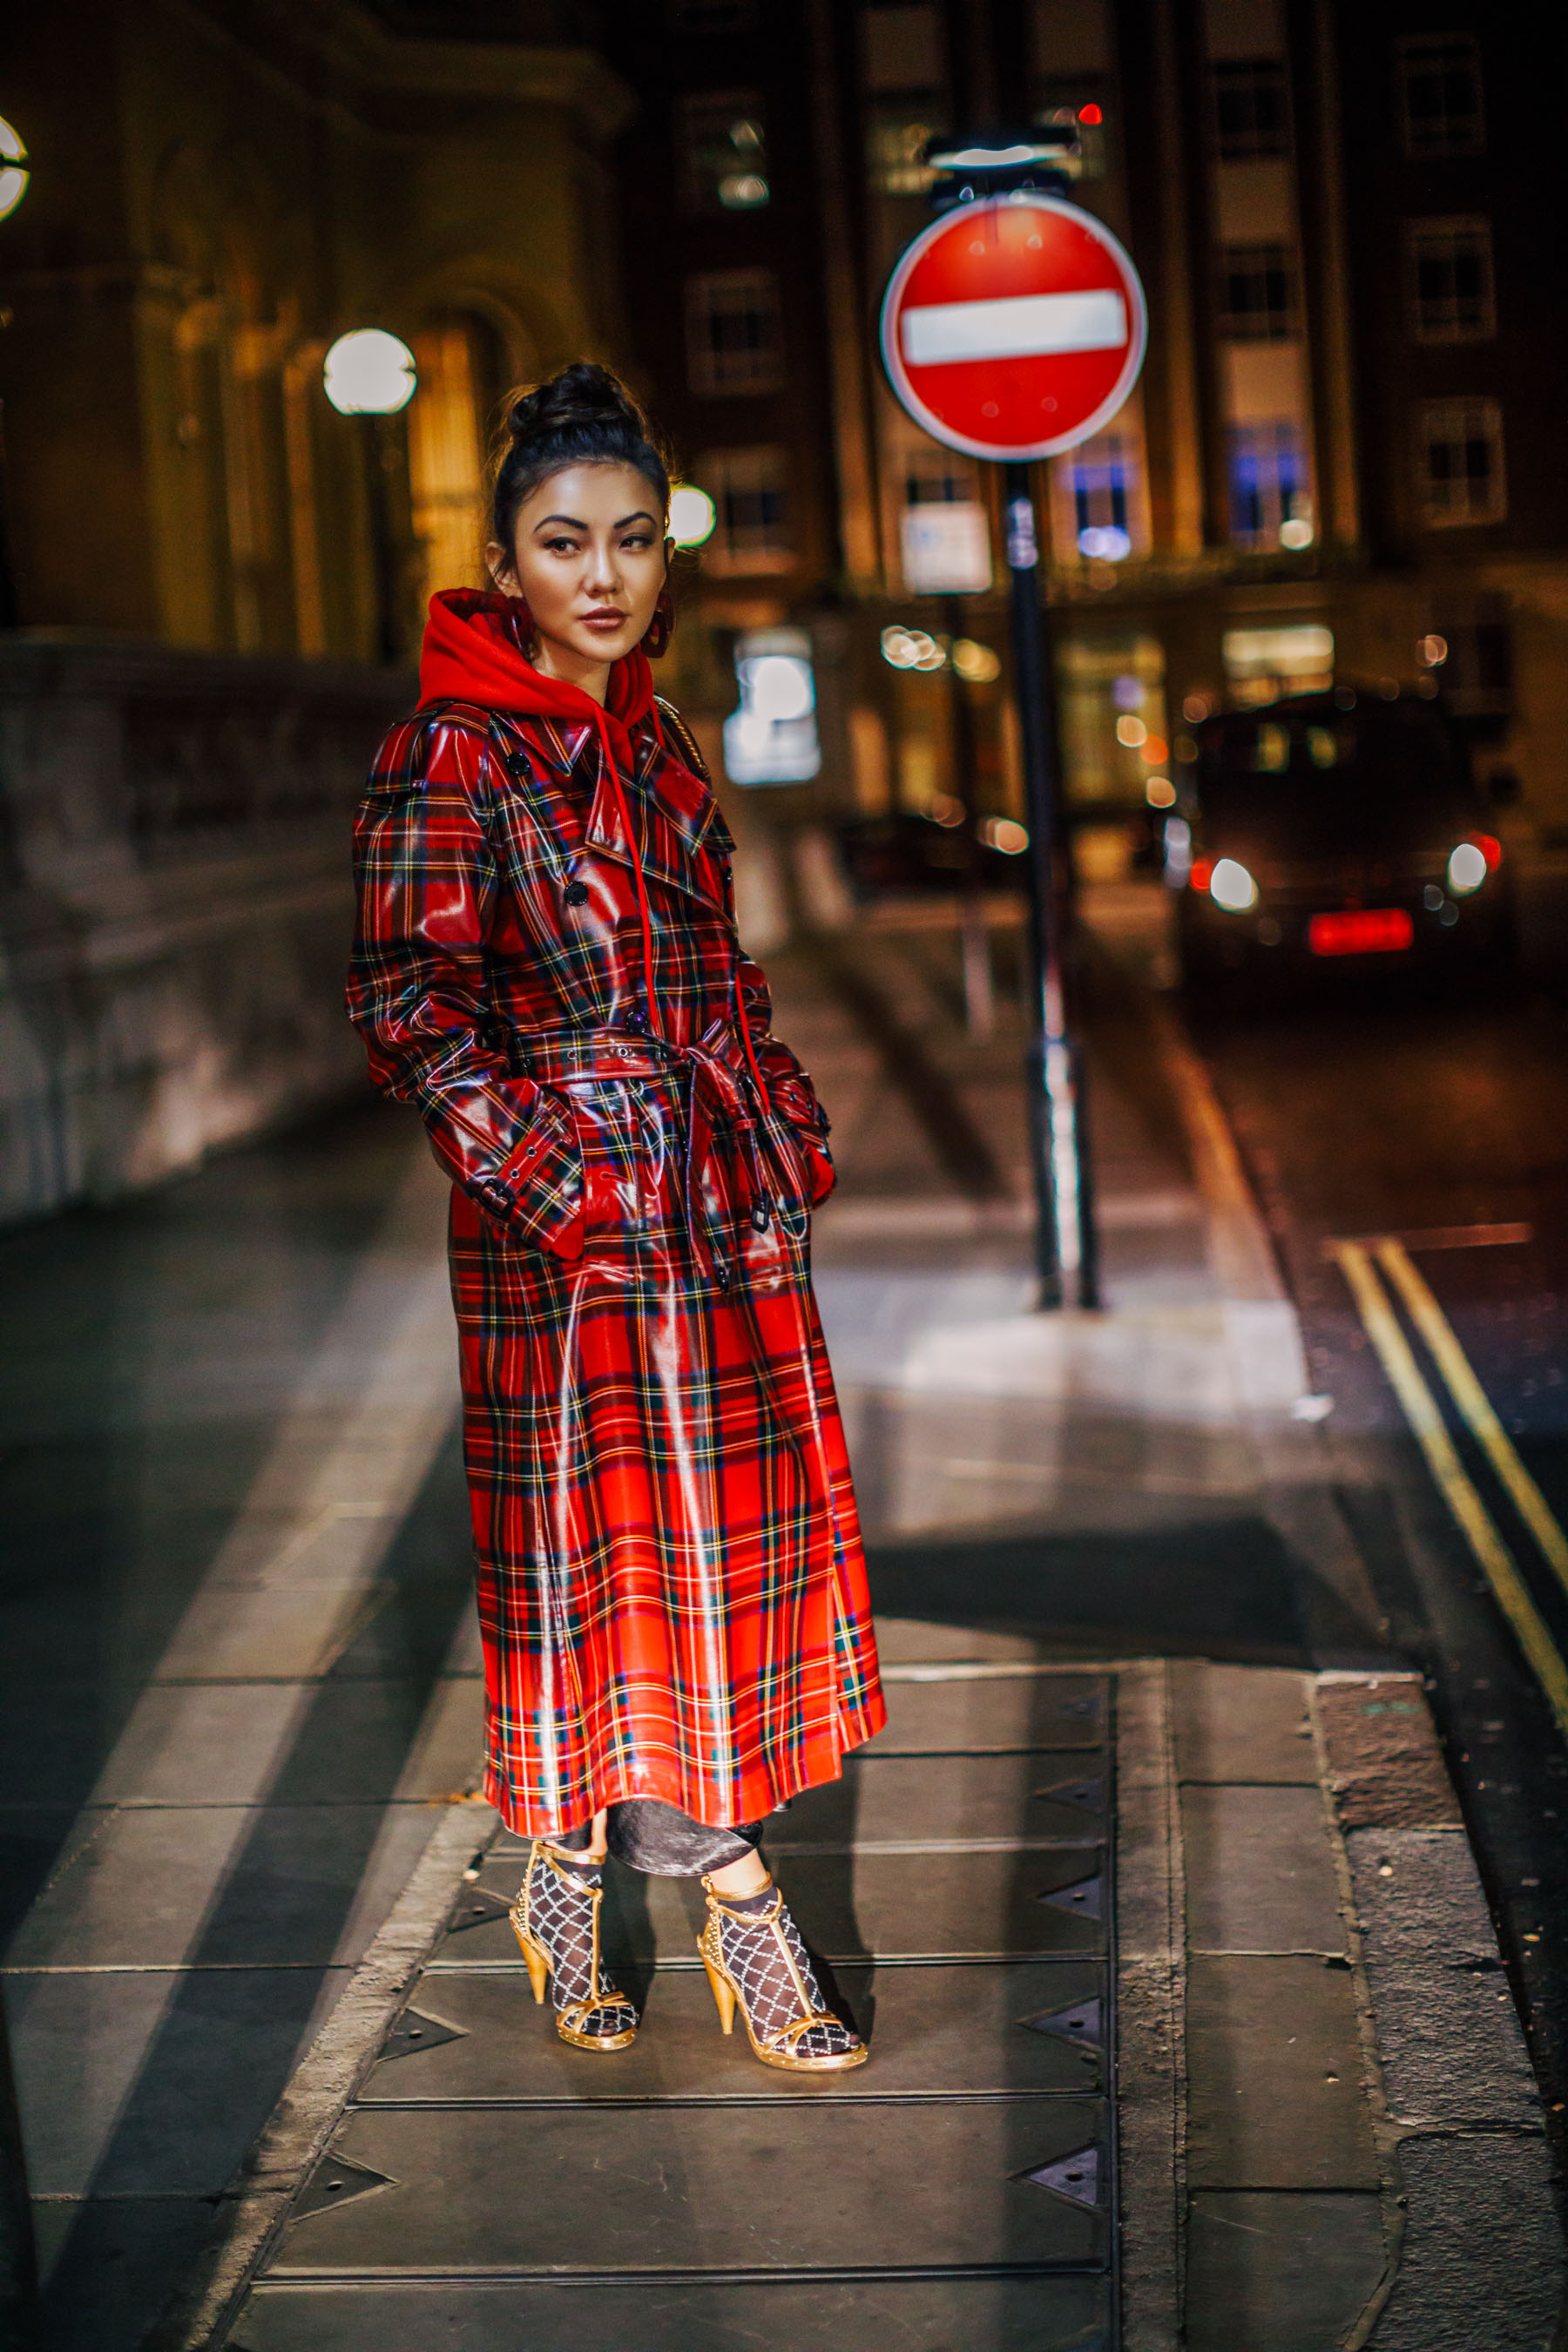 London Fashion Week Recap - burberry trench coat, socks with sandals // Notjessfashion.com